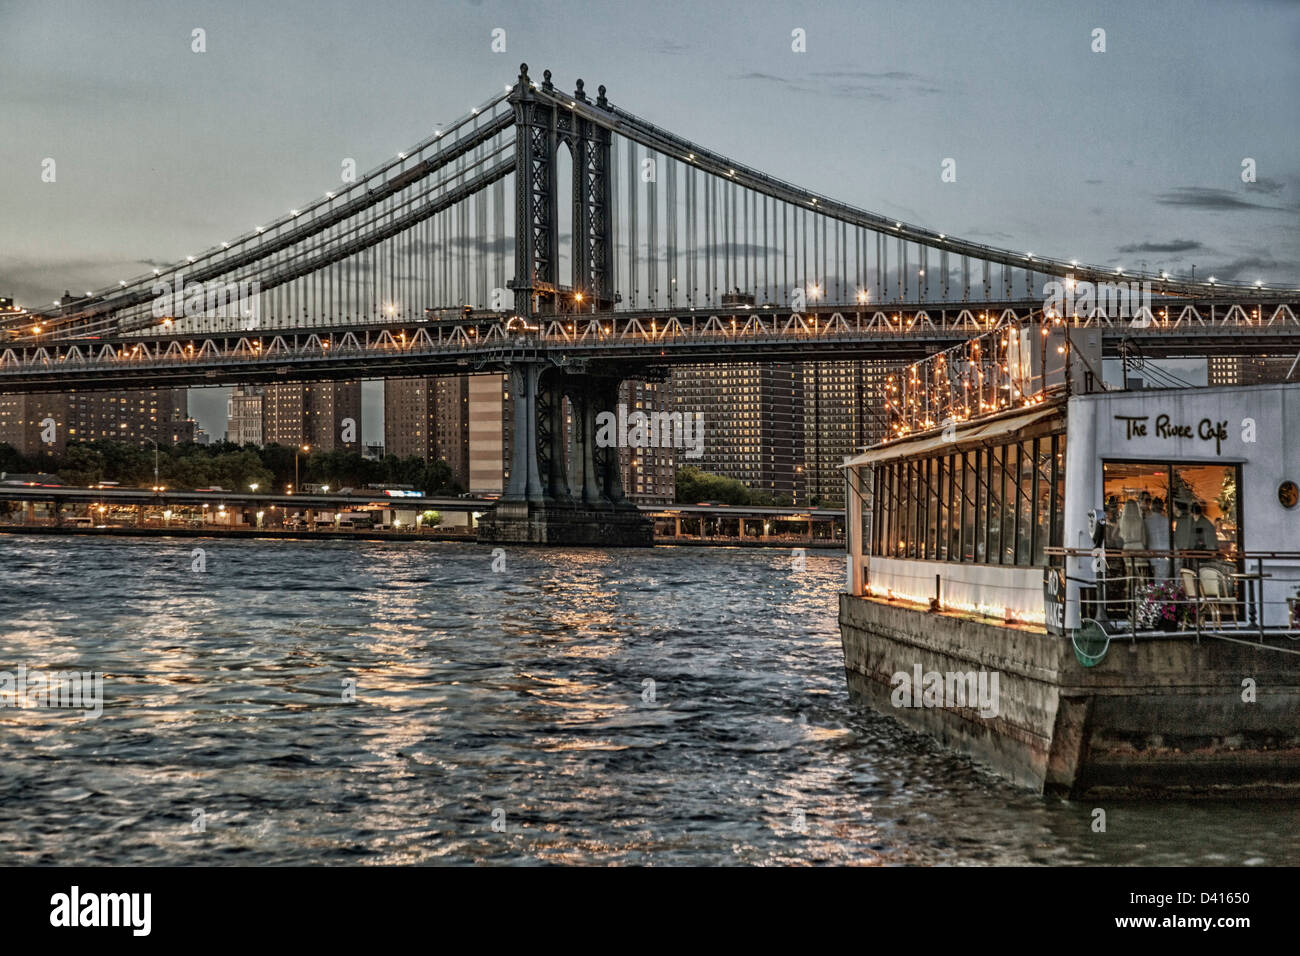 River Cafe at Brooklyn Bridge, New York city, USA Stock Photo